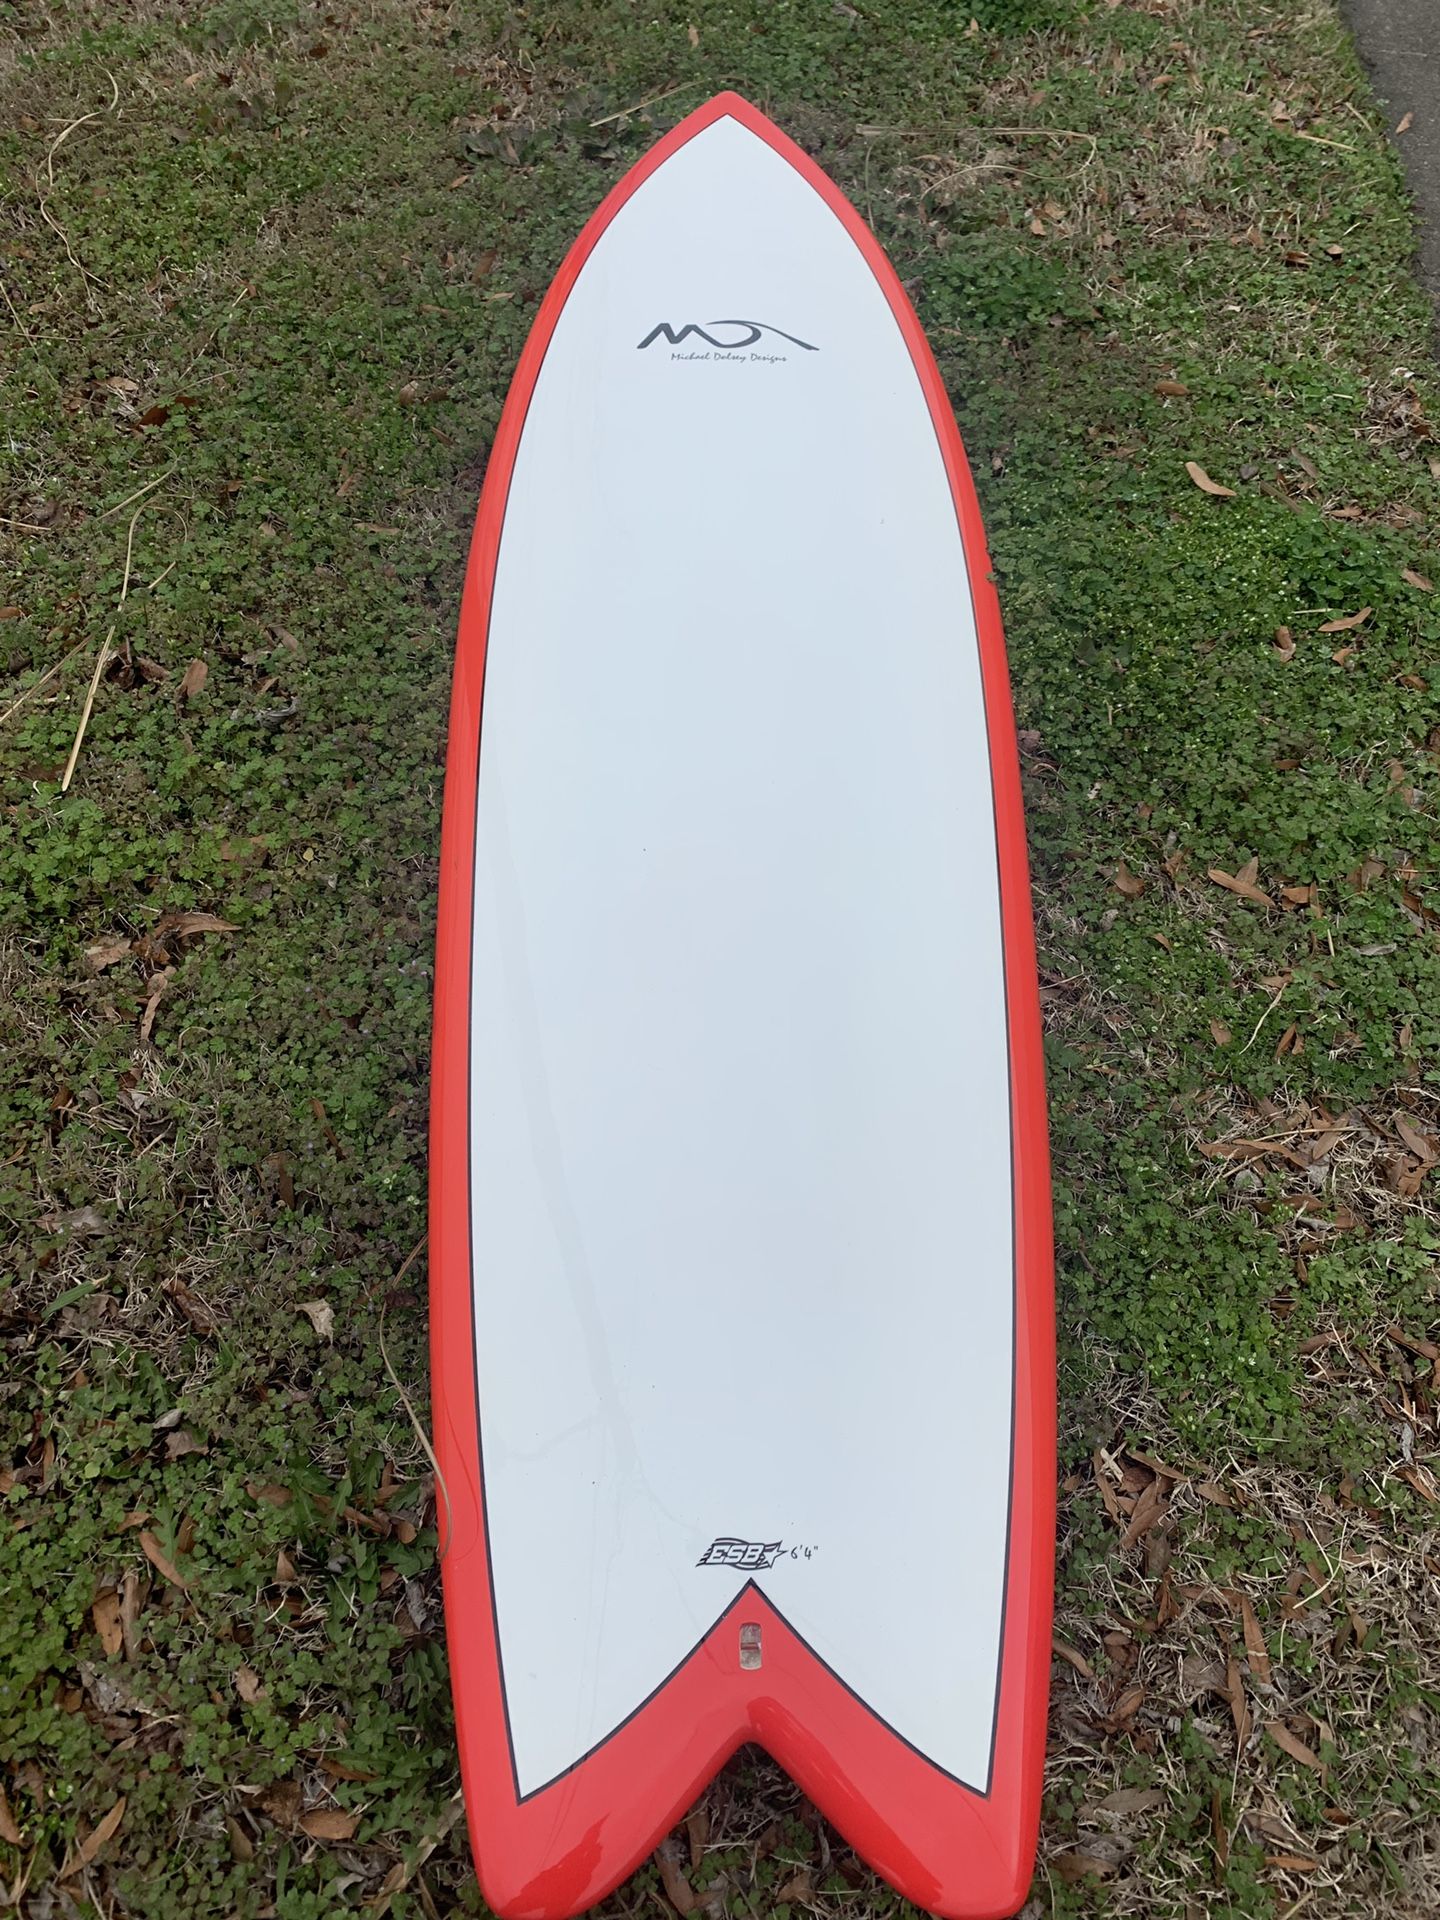 New 6’4 Epoxy Fish Surfboard!